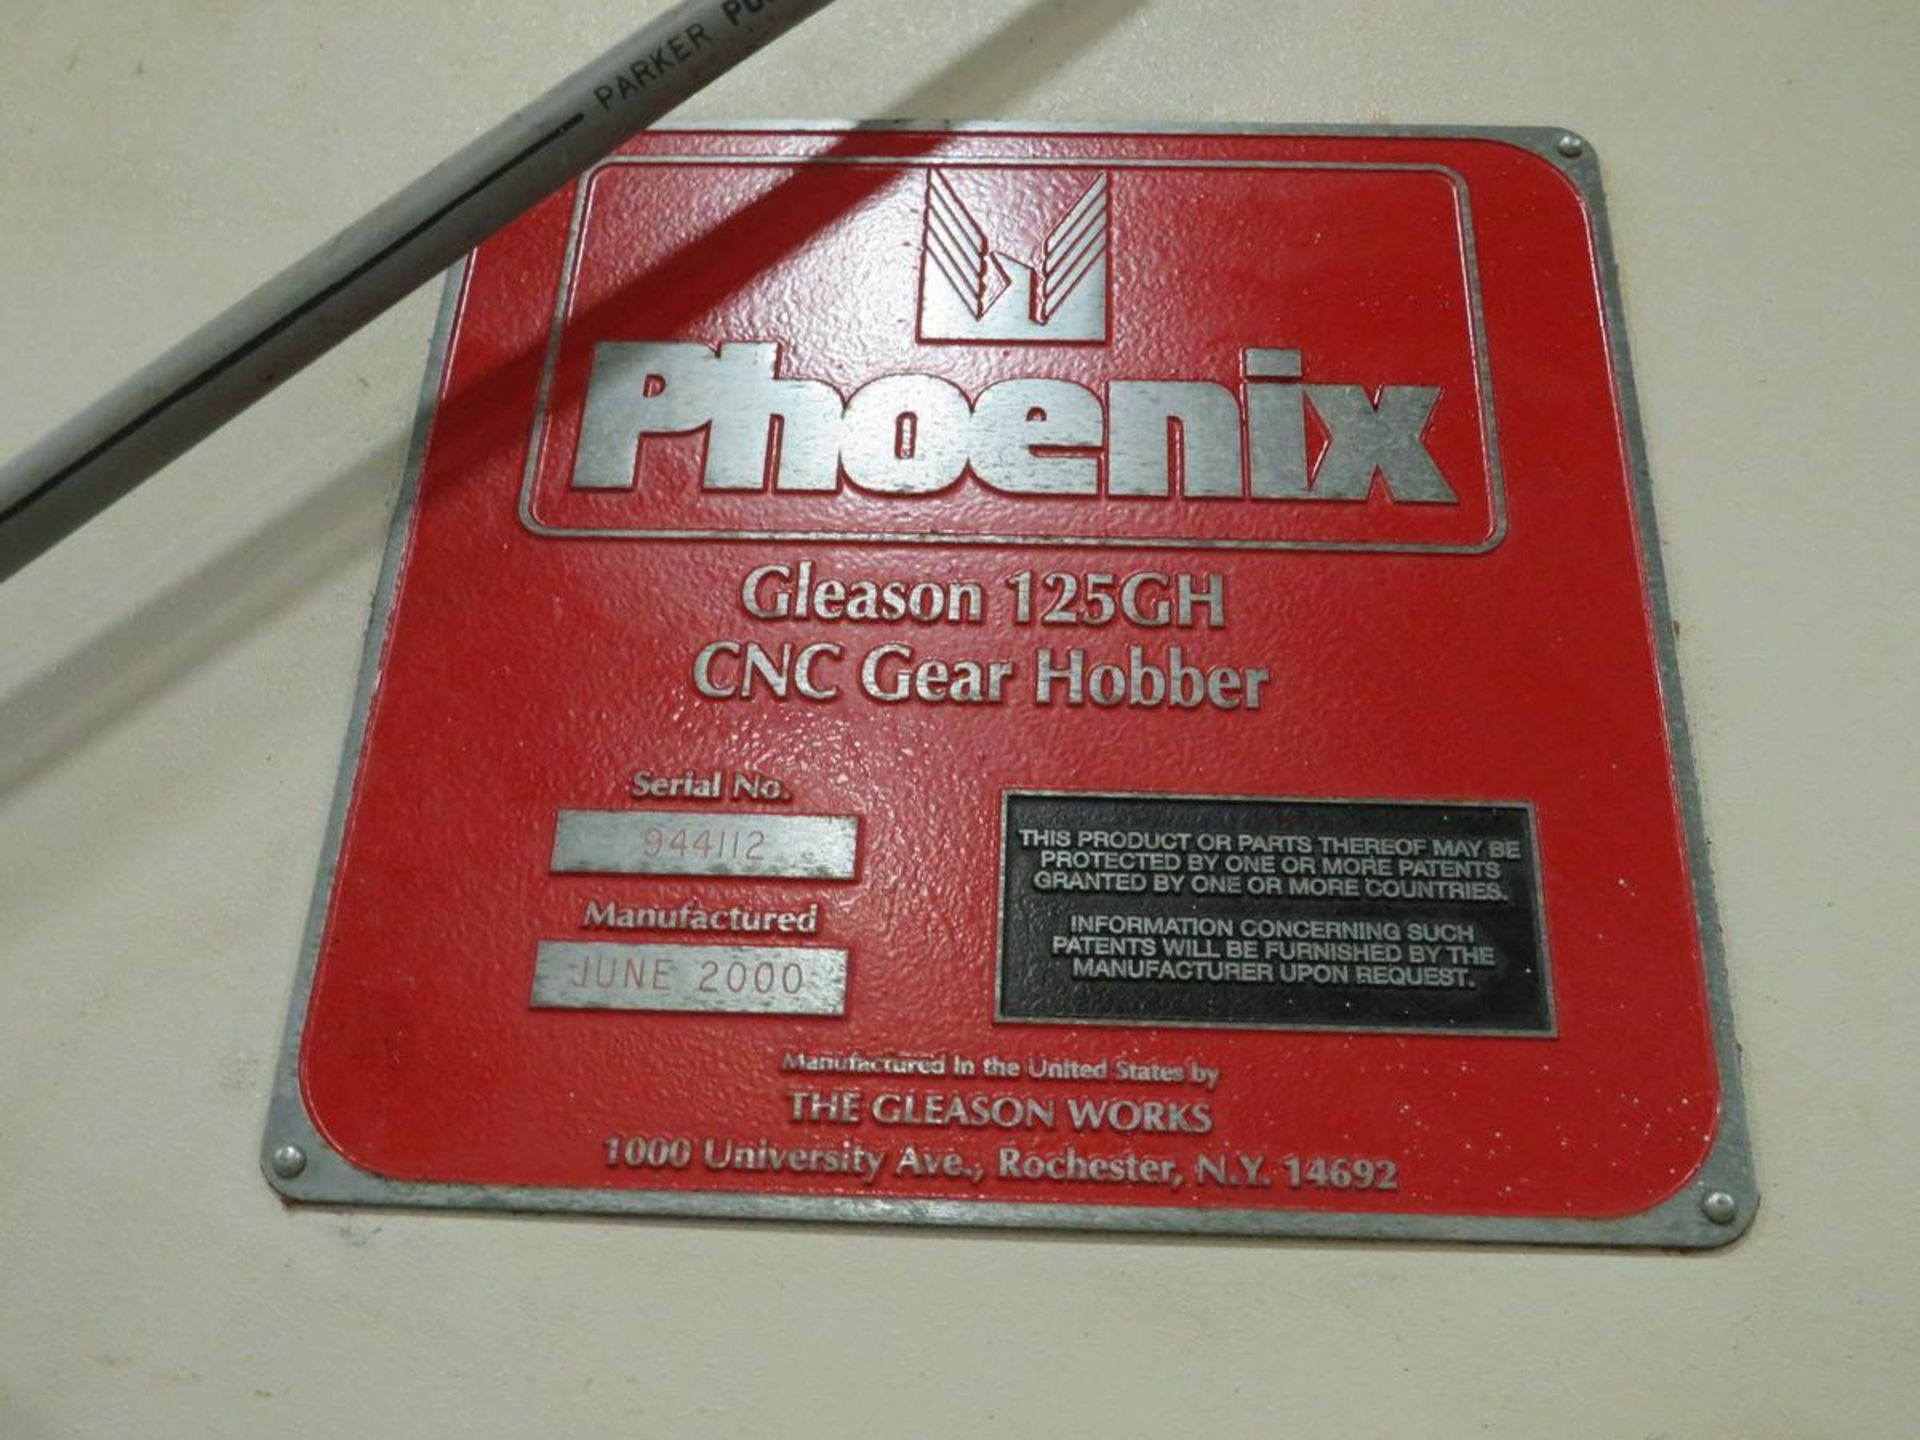 2000 Gleason / Phoenix 125GH CNC Gear Hobber - Image 9 of 9